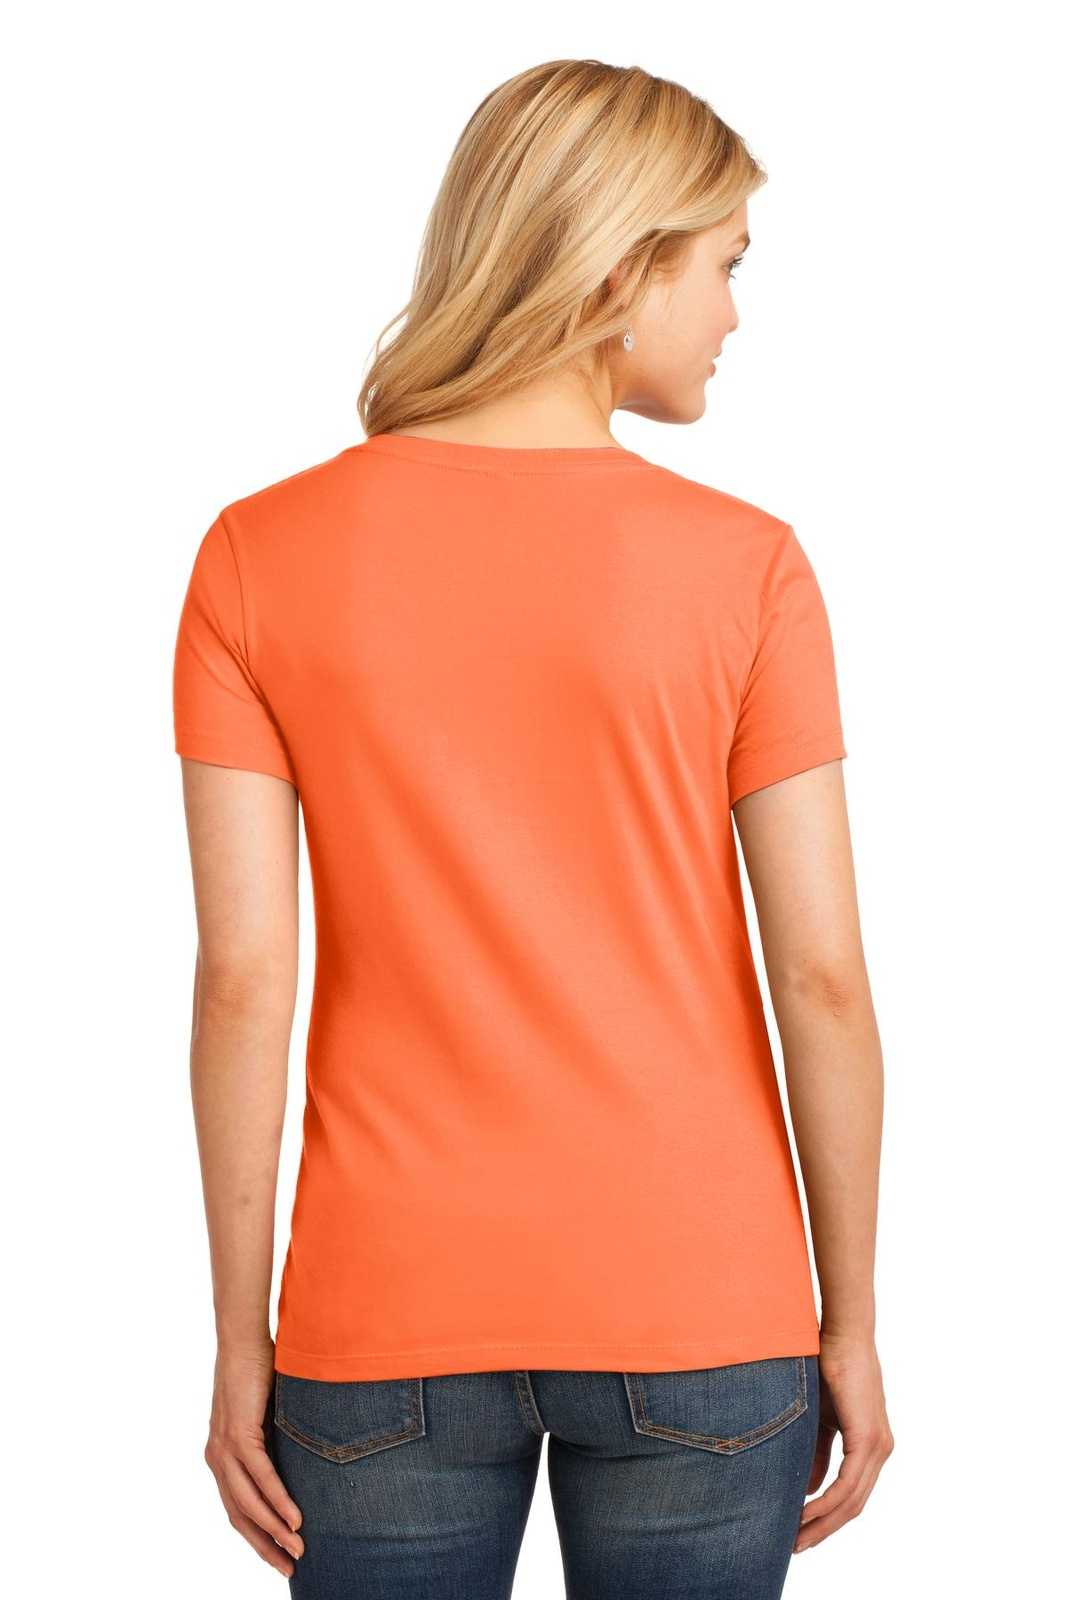 Port & Company LPC54V Ladies Core Cotton V-Neck Tee - Neon Orange - HIT a Double - 1